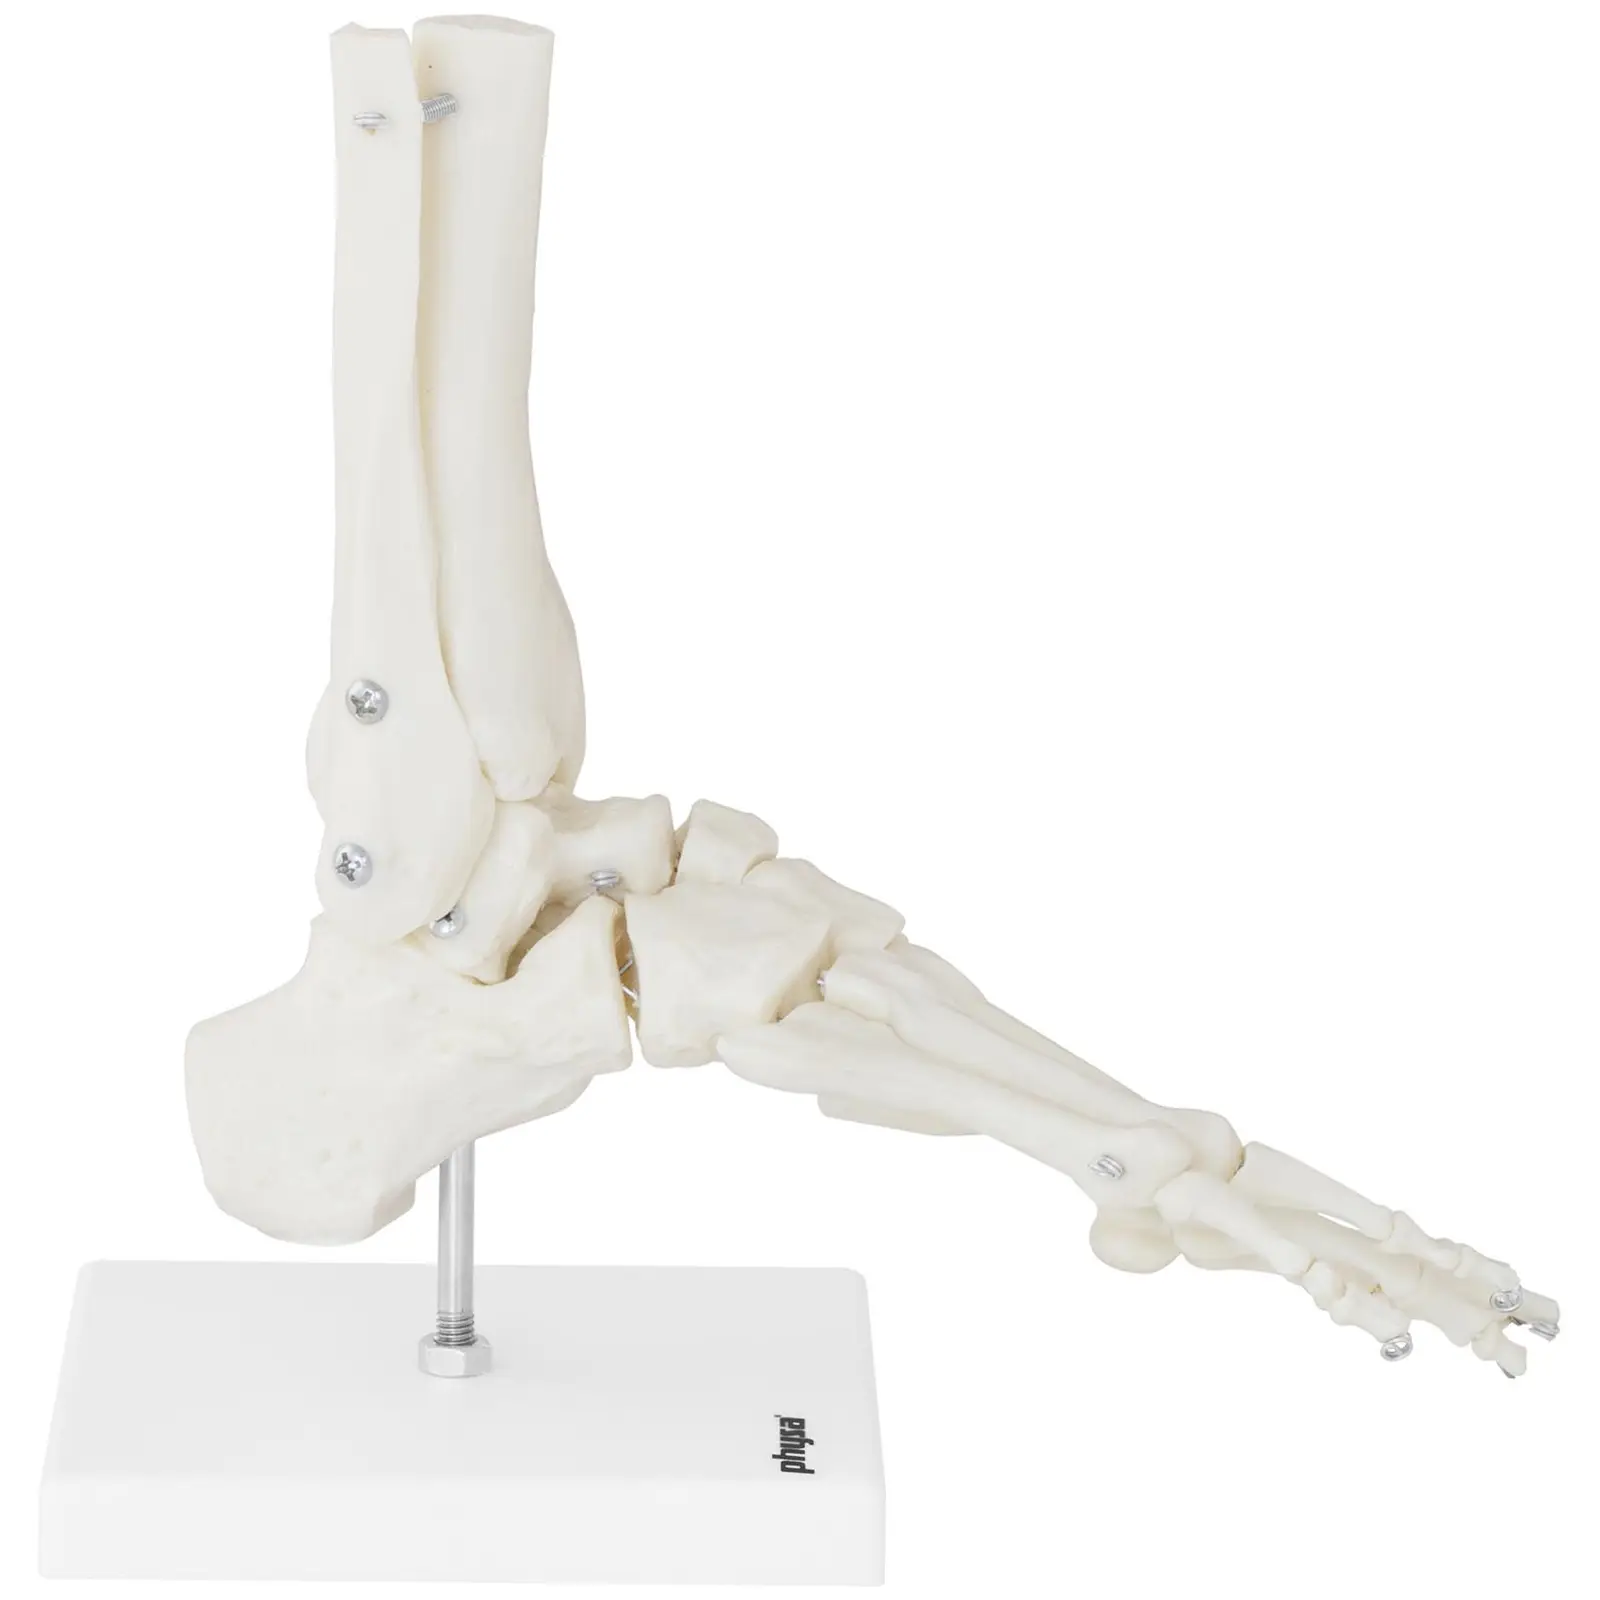 Maquette anatomique pied humain - 4